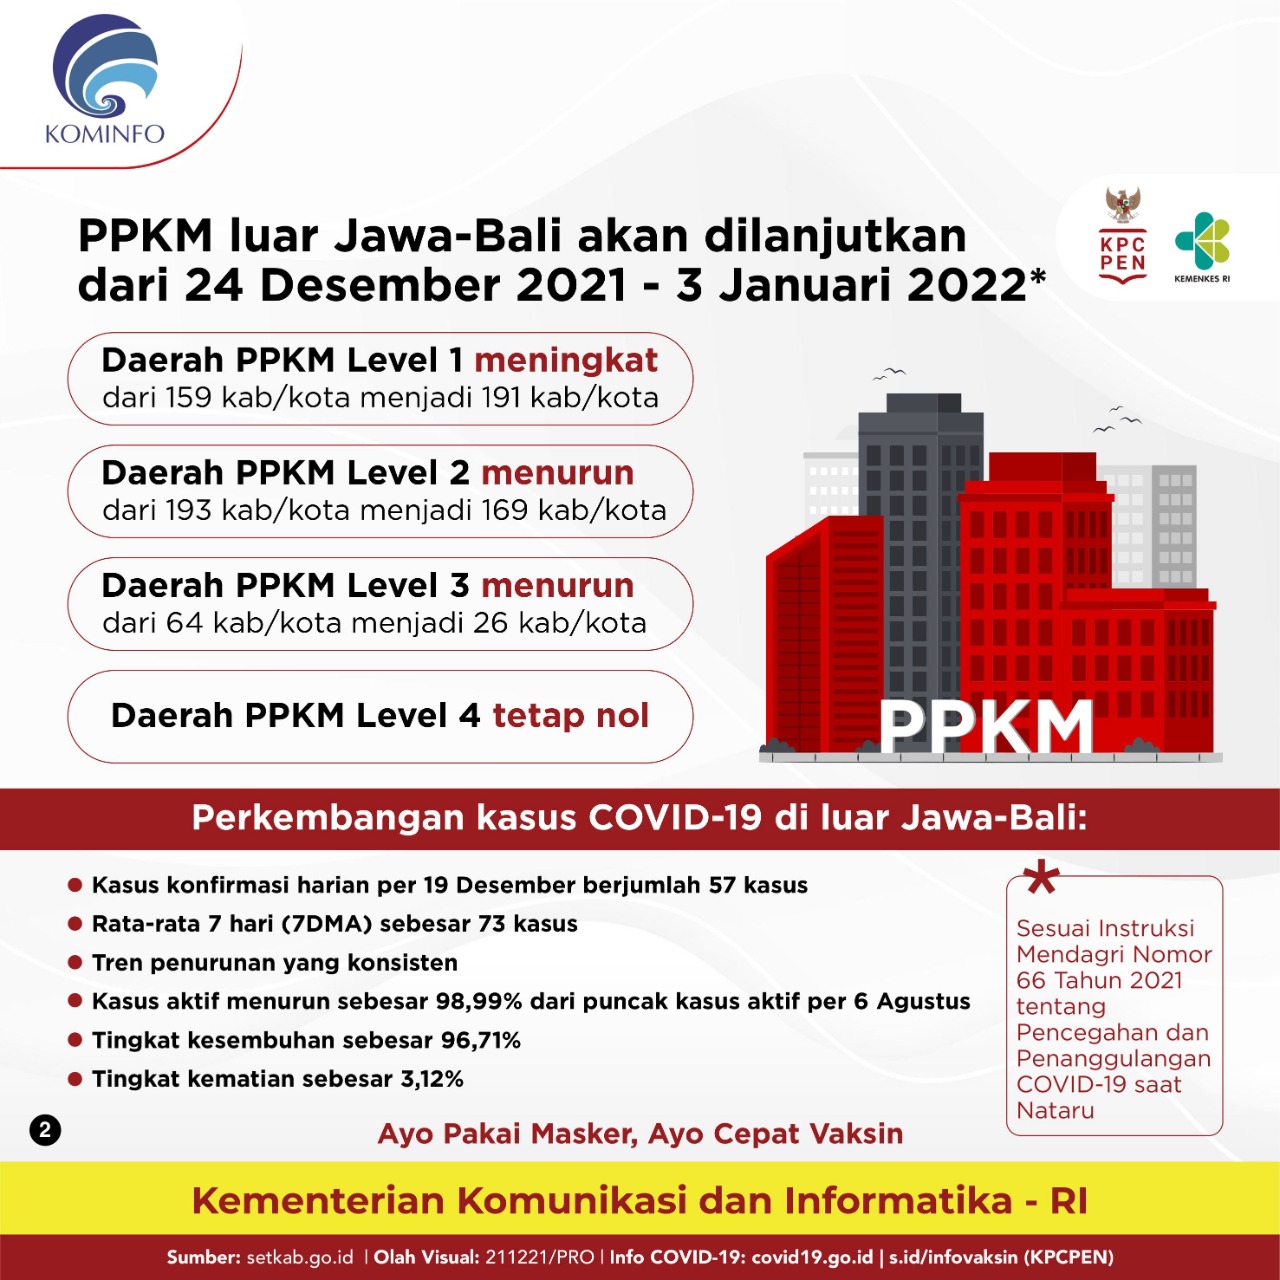 Daerah ppkm level 4